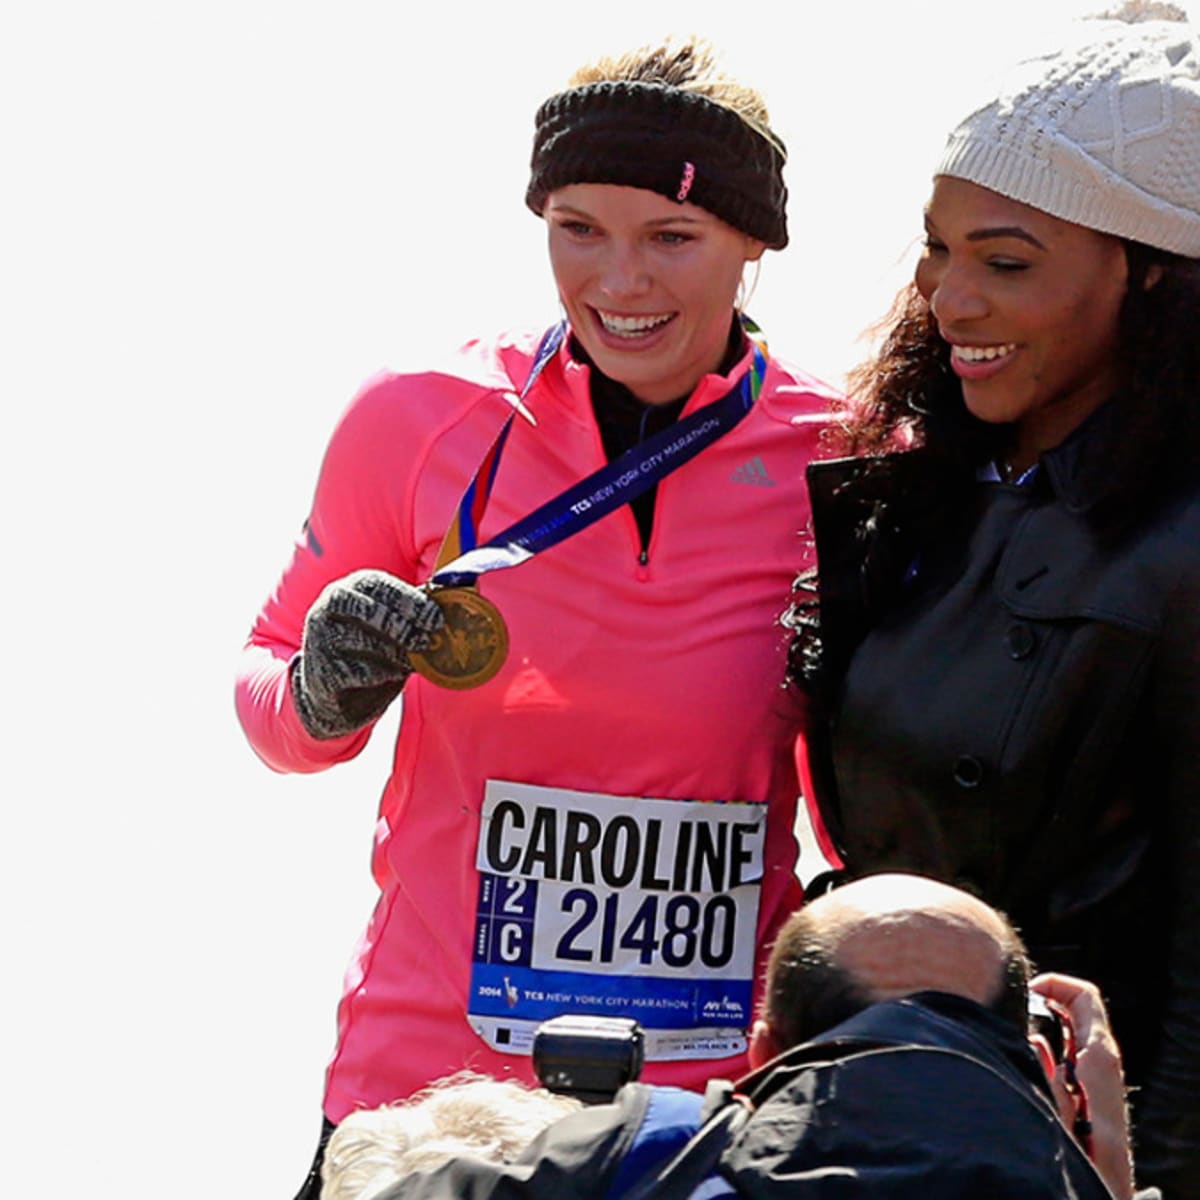 Caroline Wozniacki completes York City marathon in impressive time - Sports Illustrated